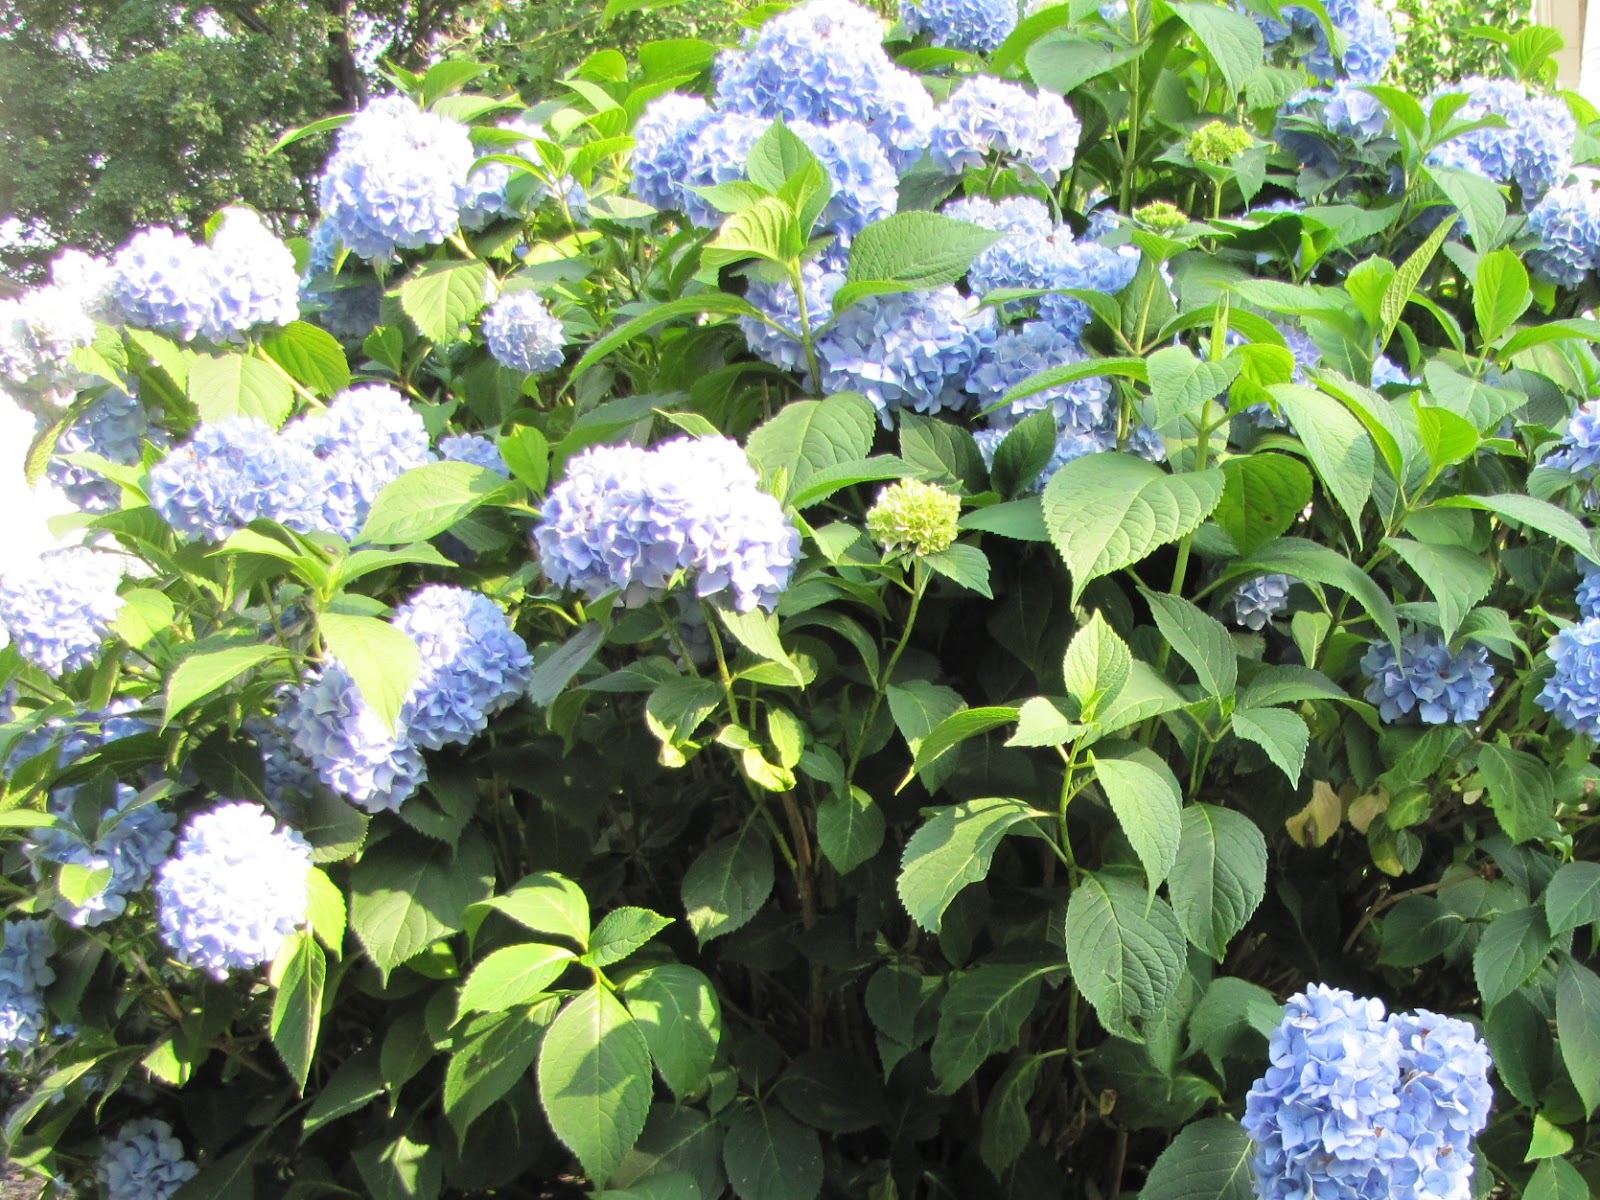 mophead hydrangea shrub with blue flowers